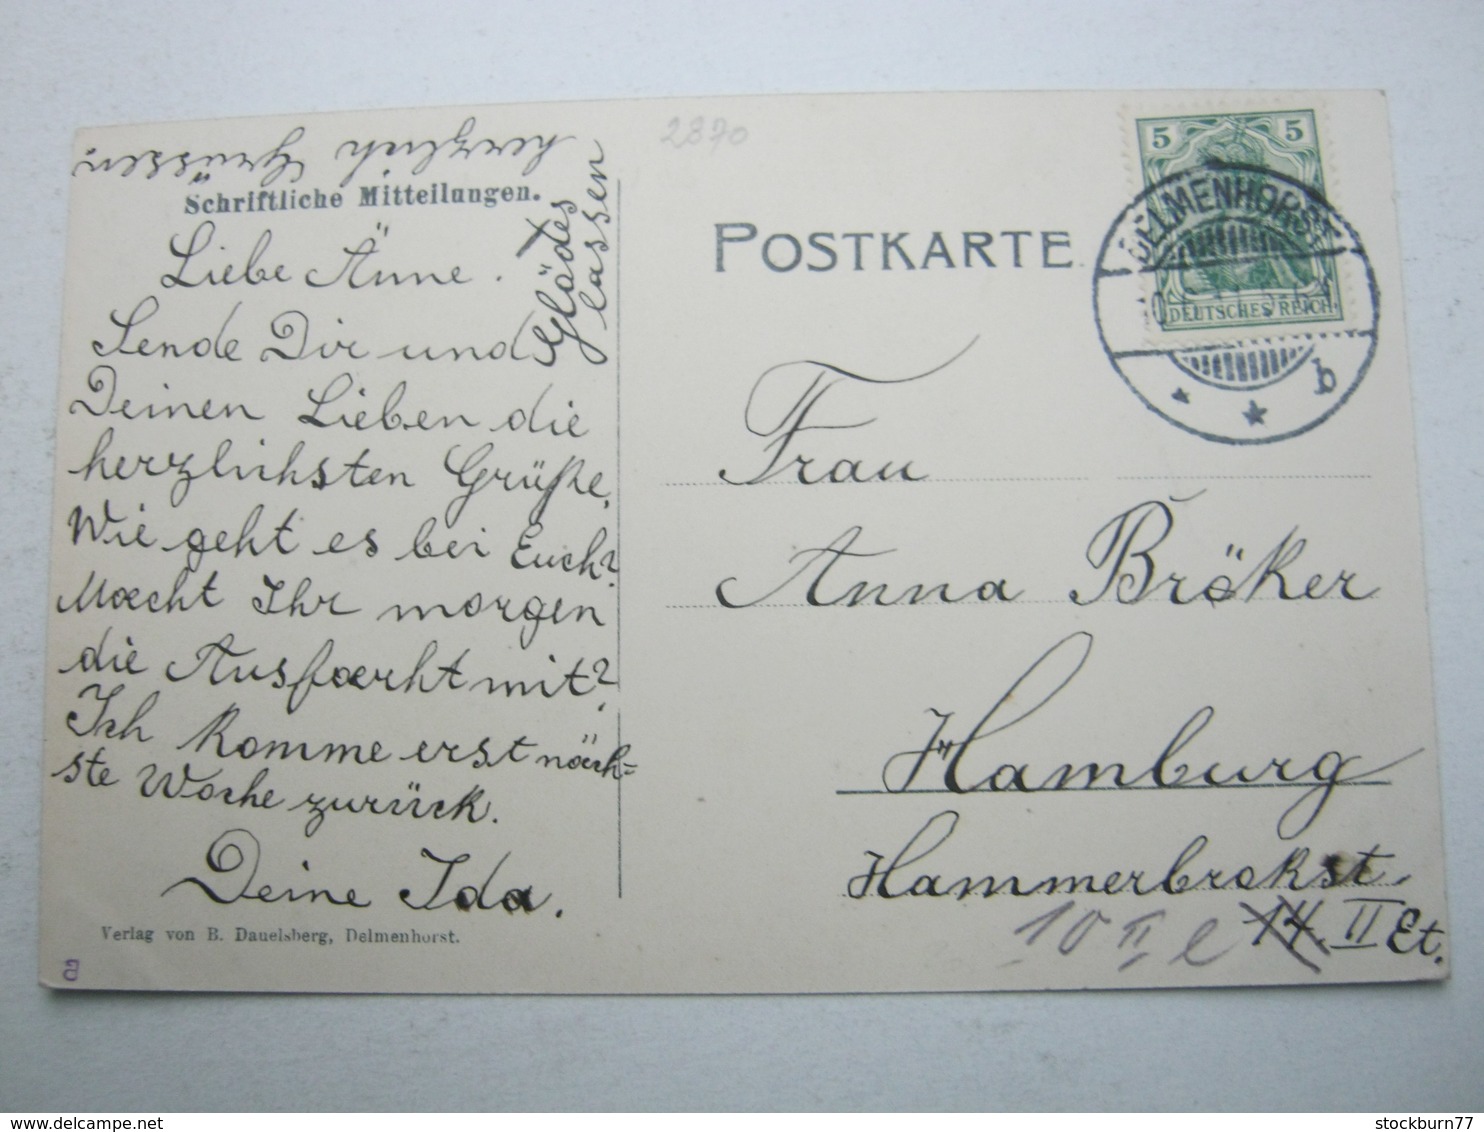 DELMENHORST ,Seltene Karte Um 1911 - Delmenhorst